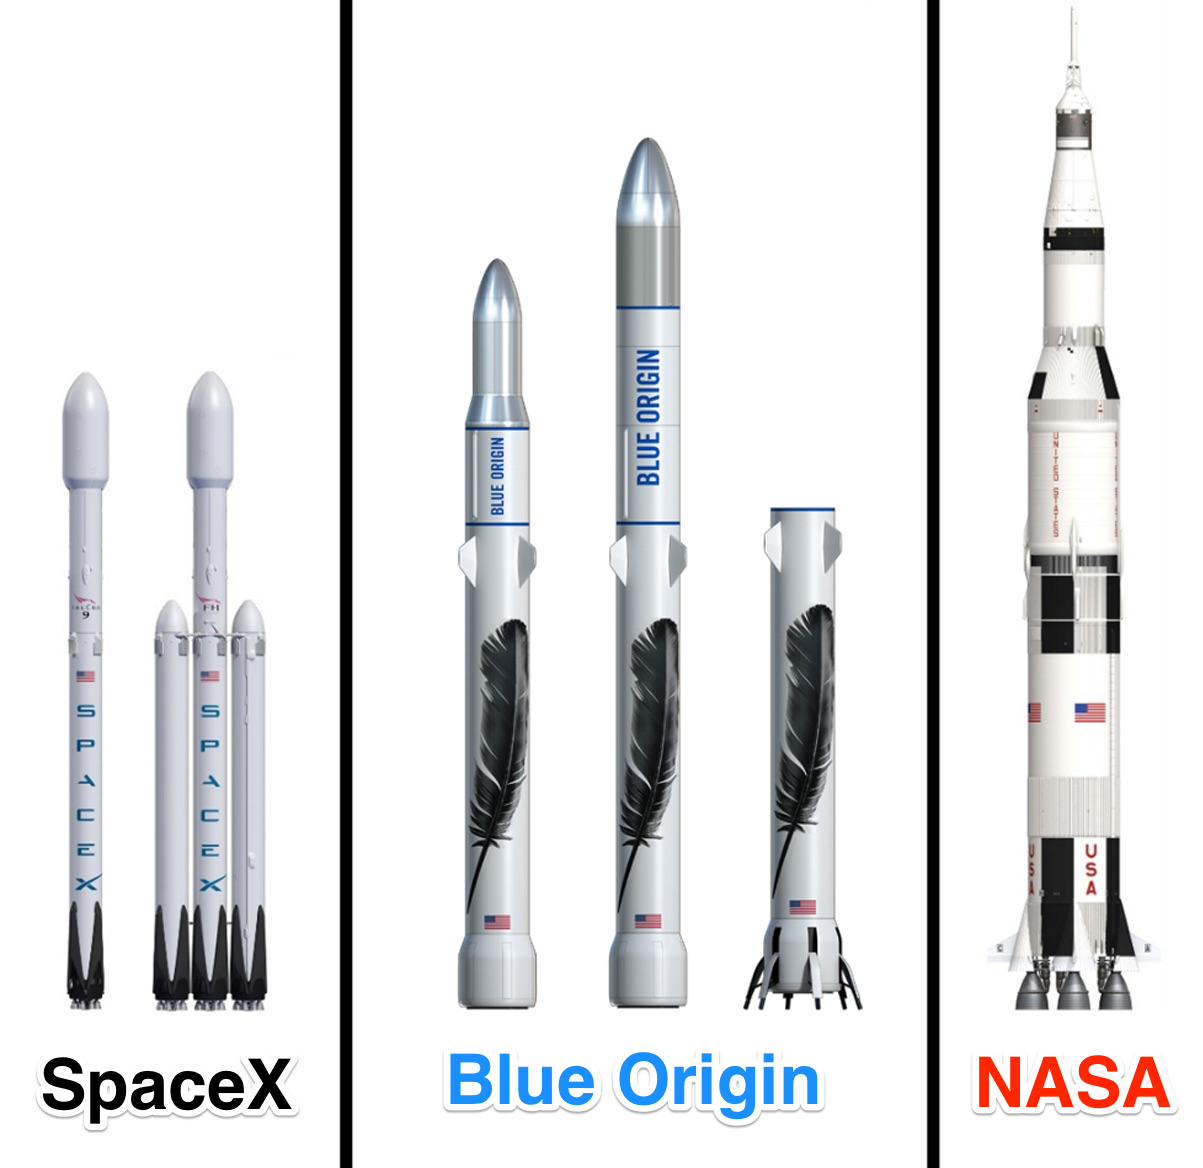 Blue Origin Spacex Nasa Rockets Compared - Blue Origin, Transparent background PNG HD thumbnail